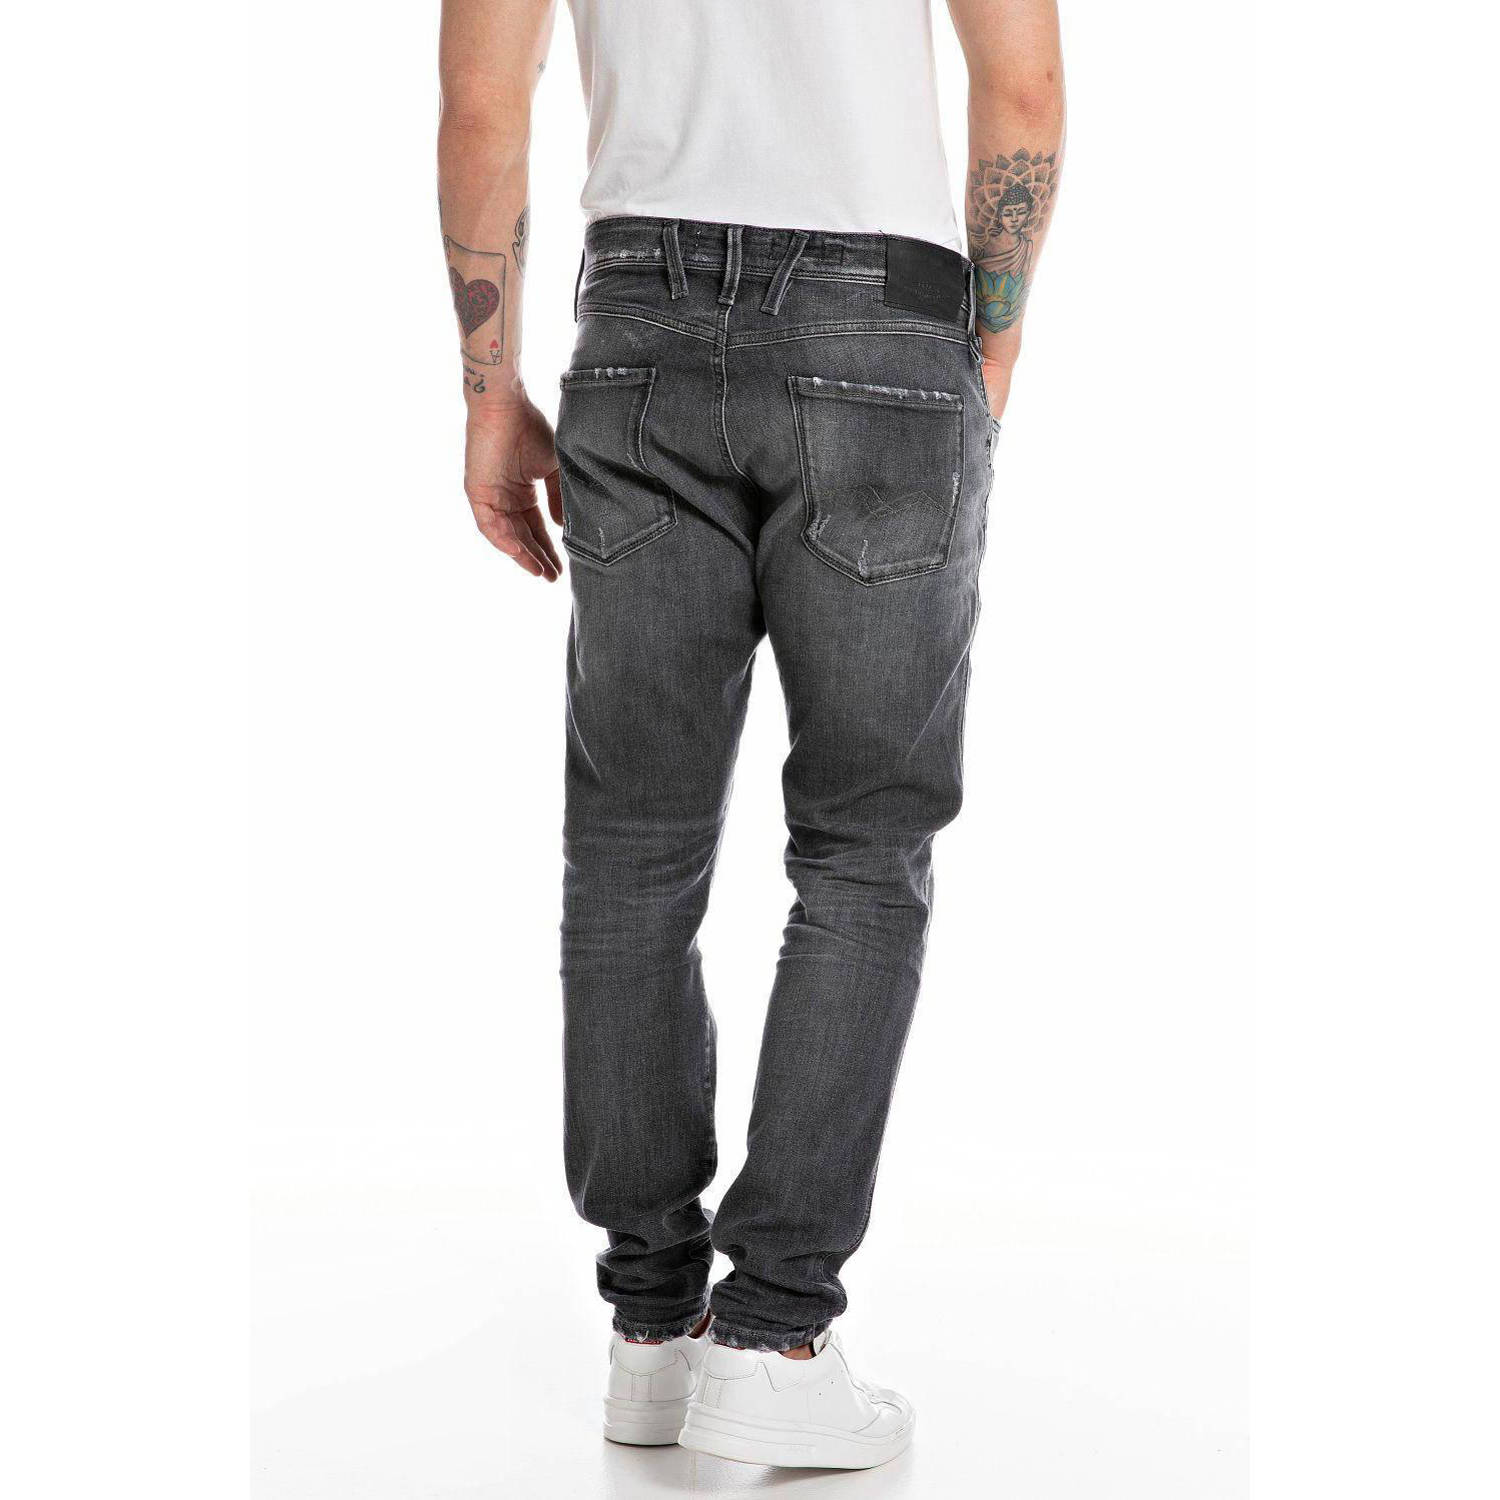 REPLAY slim fit jeans BRONNY dark grey